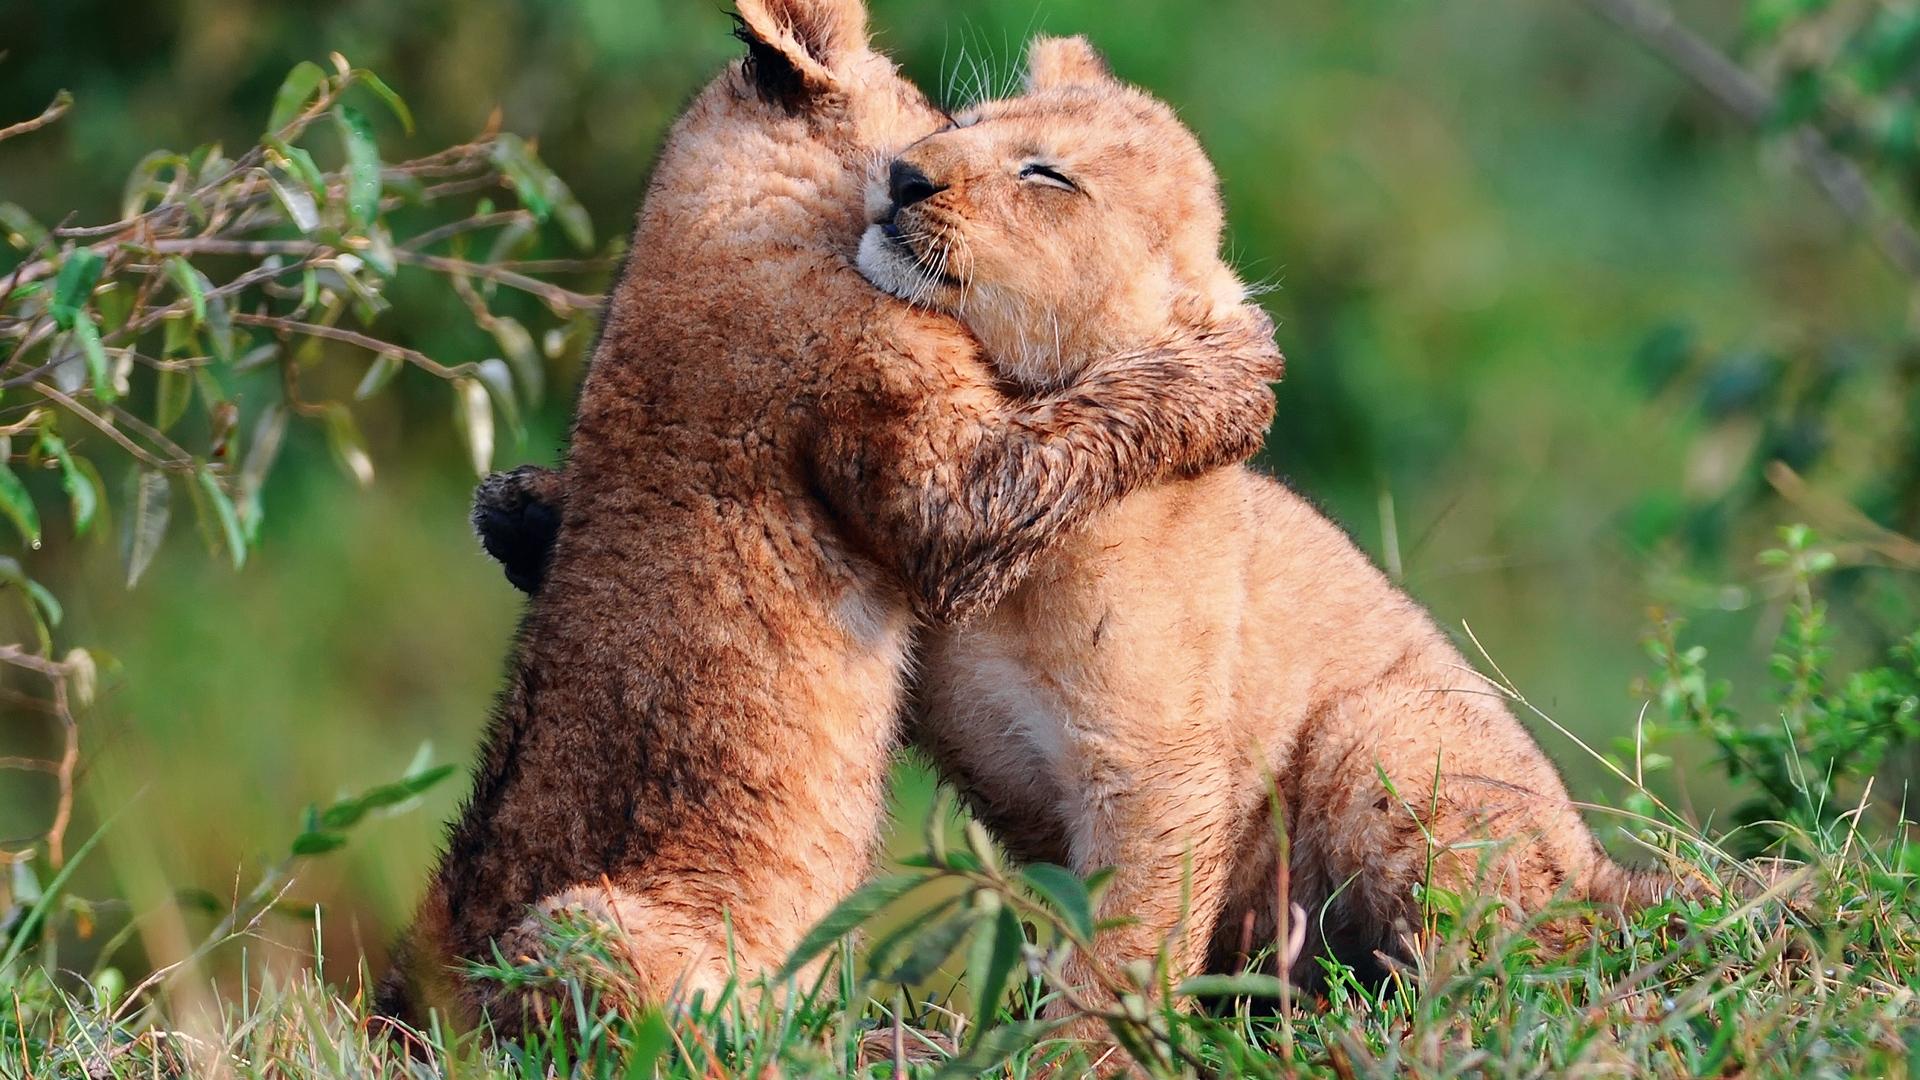 Baby Lions Hug for 1920 x 1080 HDTV 1080p resolution